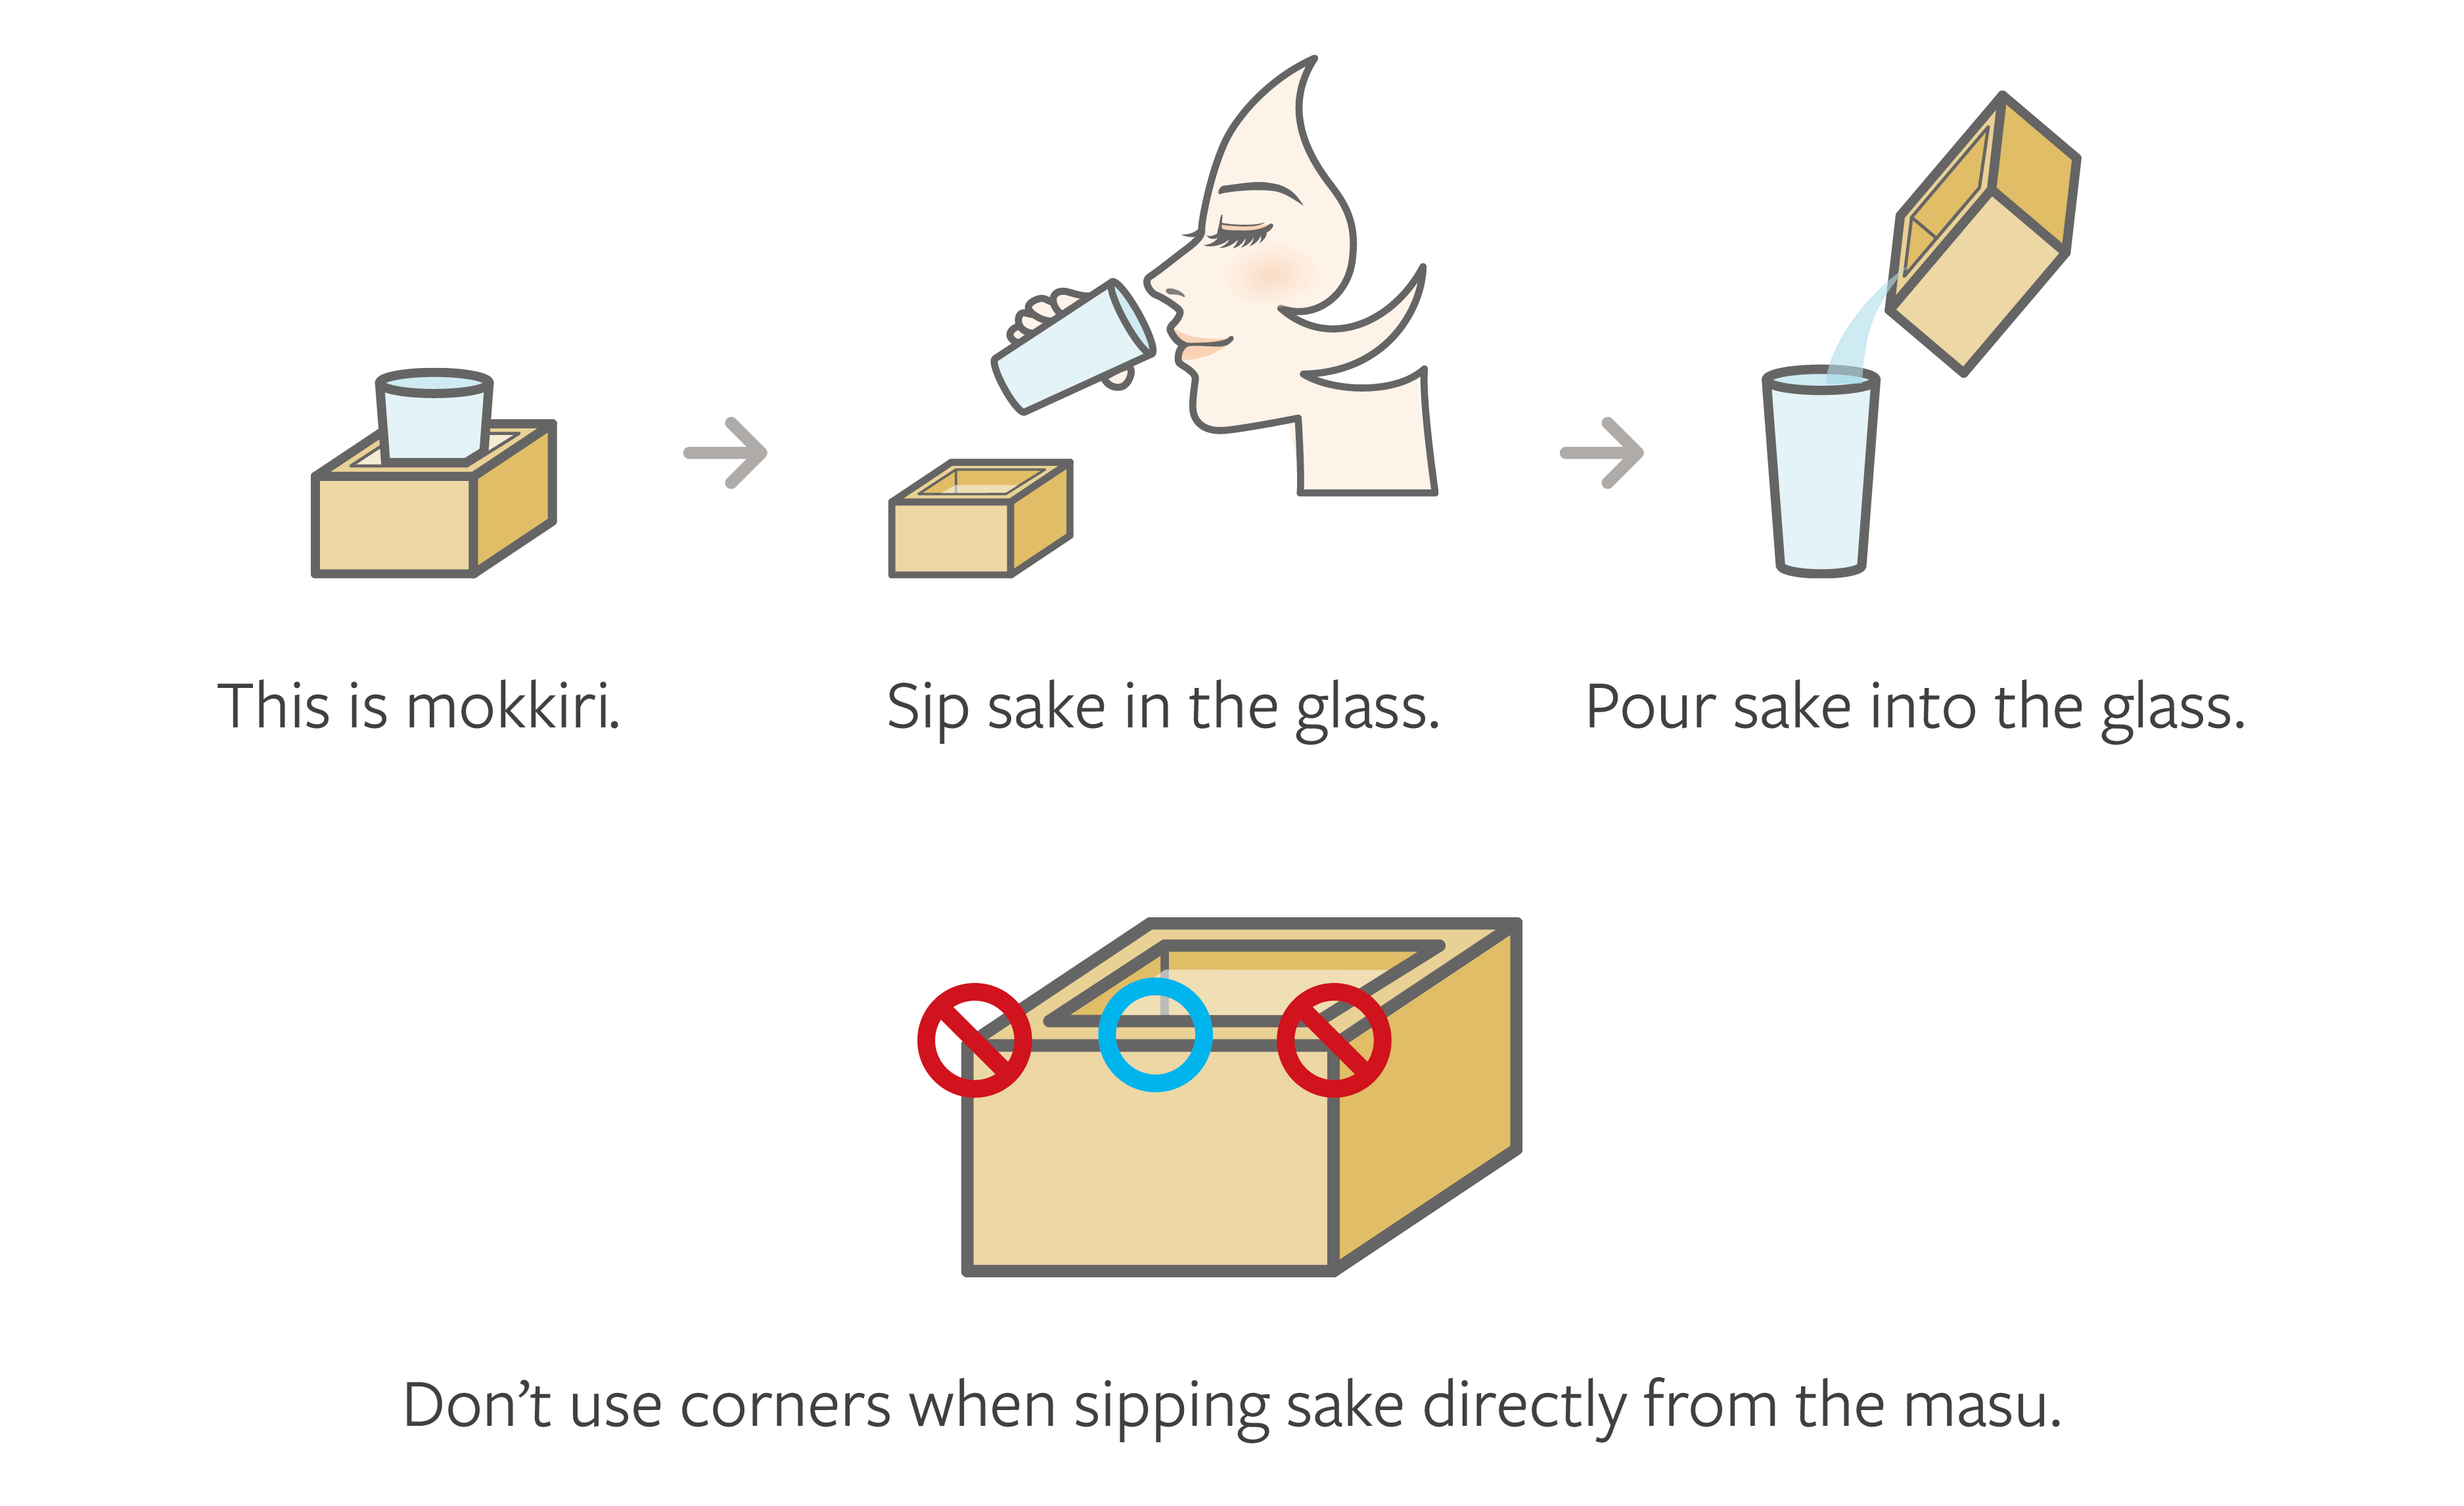 How to drink sake mokkiri and masu